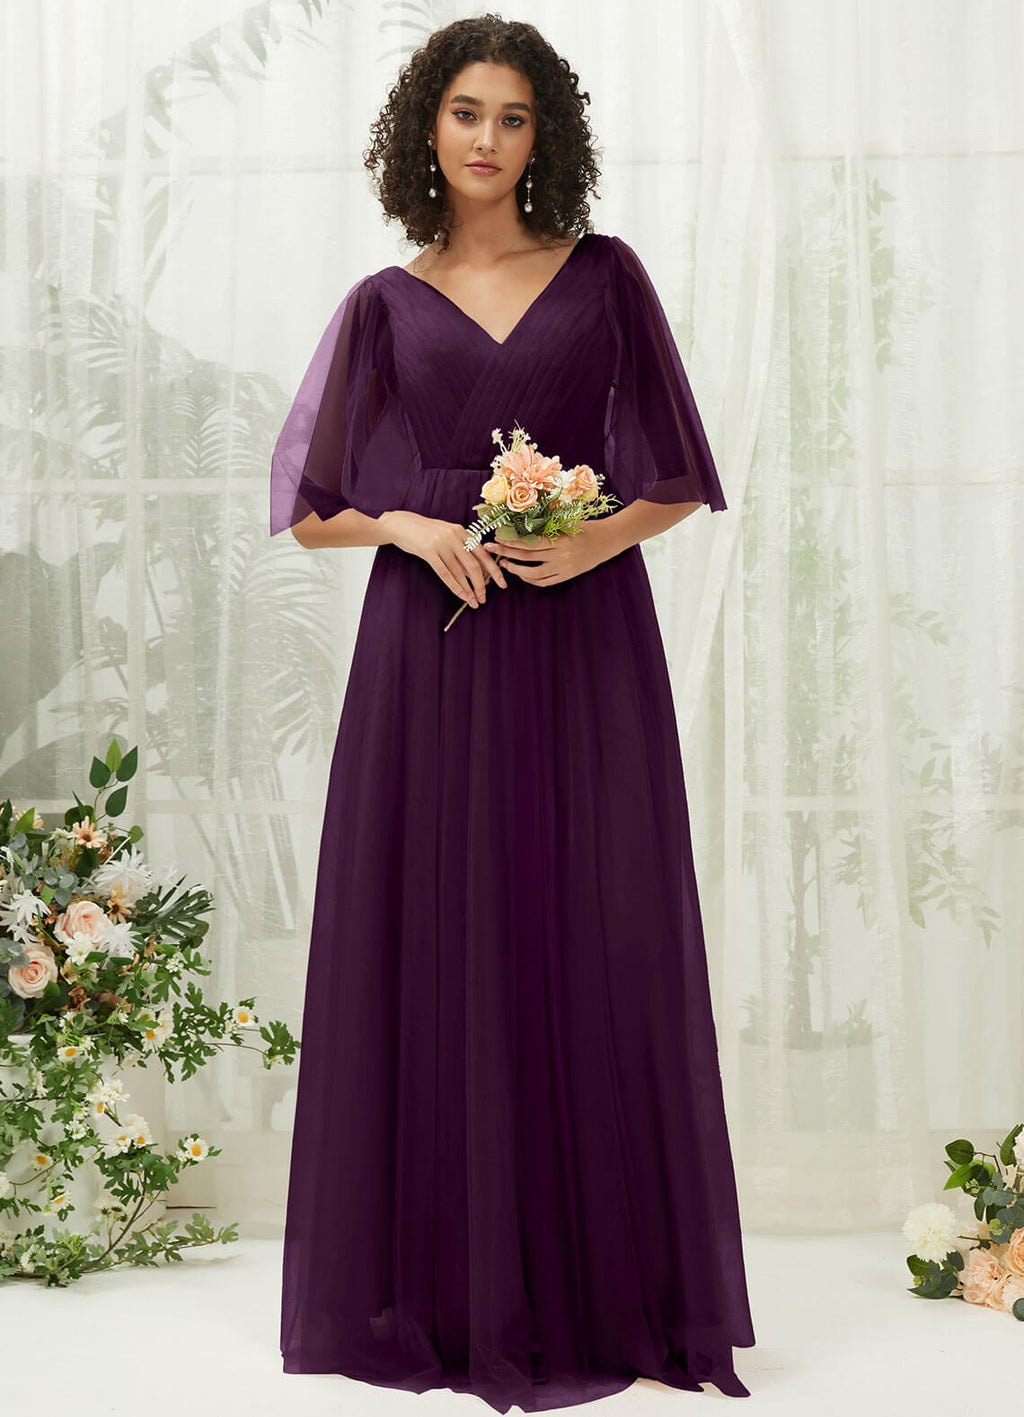 NZ Bridal Plum V Neck Tulle Floor Length bridesmaid dresses R1026 Thea a